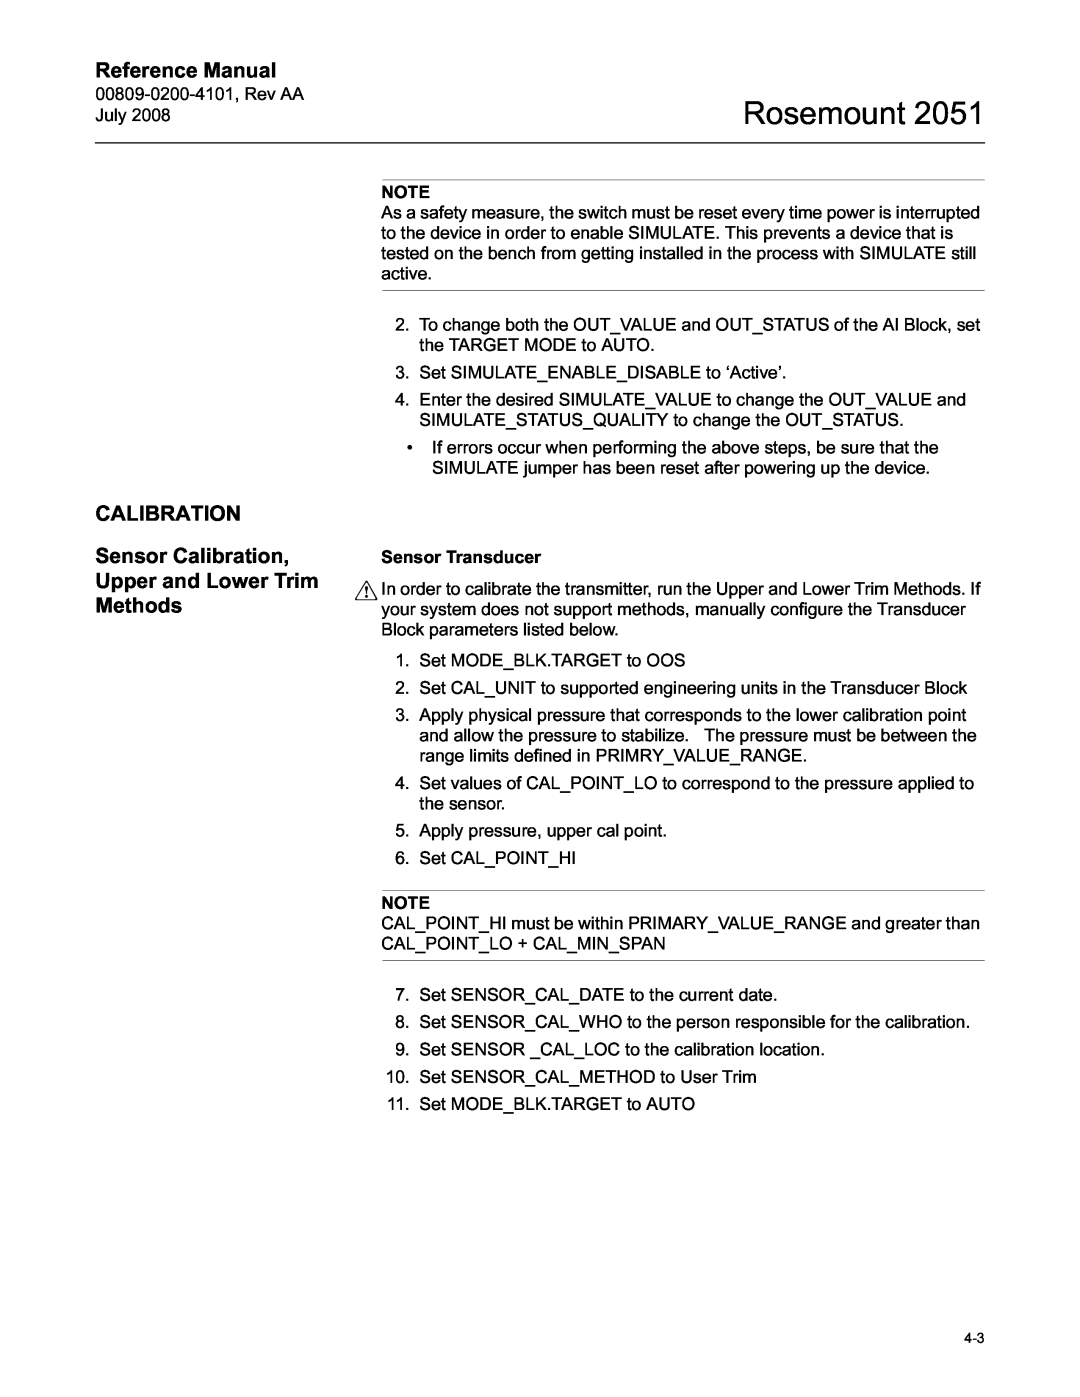 Emerson Process Management 2051 CALIBRATION Sensor Calibration, Upper and Lower Trim Methods, Rosemount, Reference Manual 